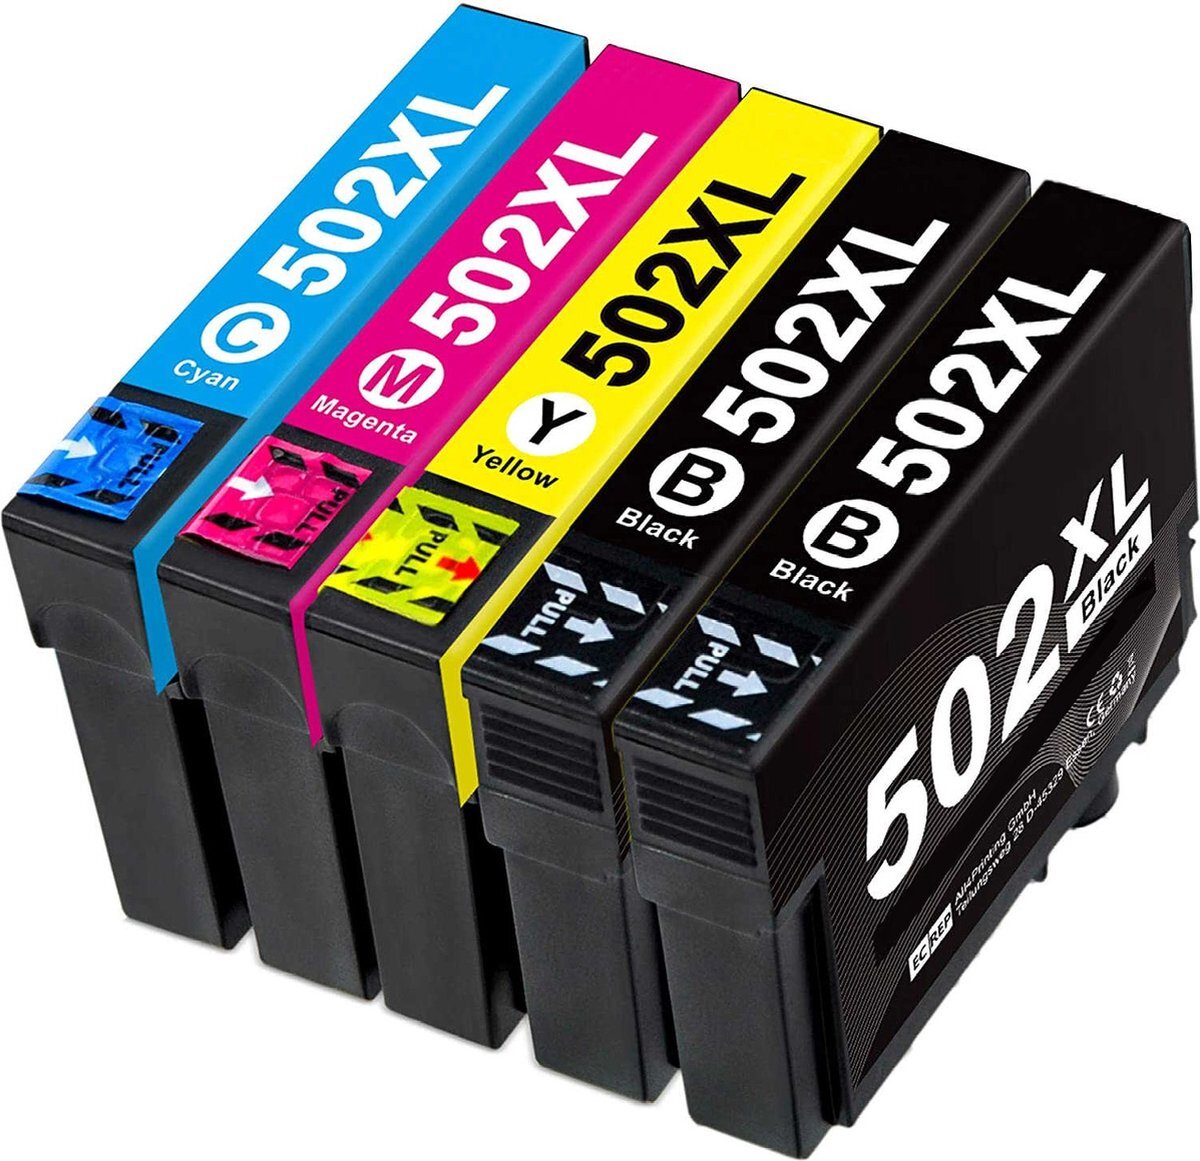 InktDL Compatible inkt cartridges voor Epson 502 / 502XL | Multipack van 5 inktcartridges voor Expression Home XP-5100, XP-5105, Workforce WF-2860, WF-2860DWF, WF-2865 en WF-2865DWF